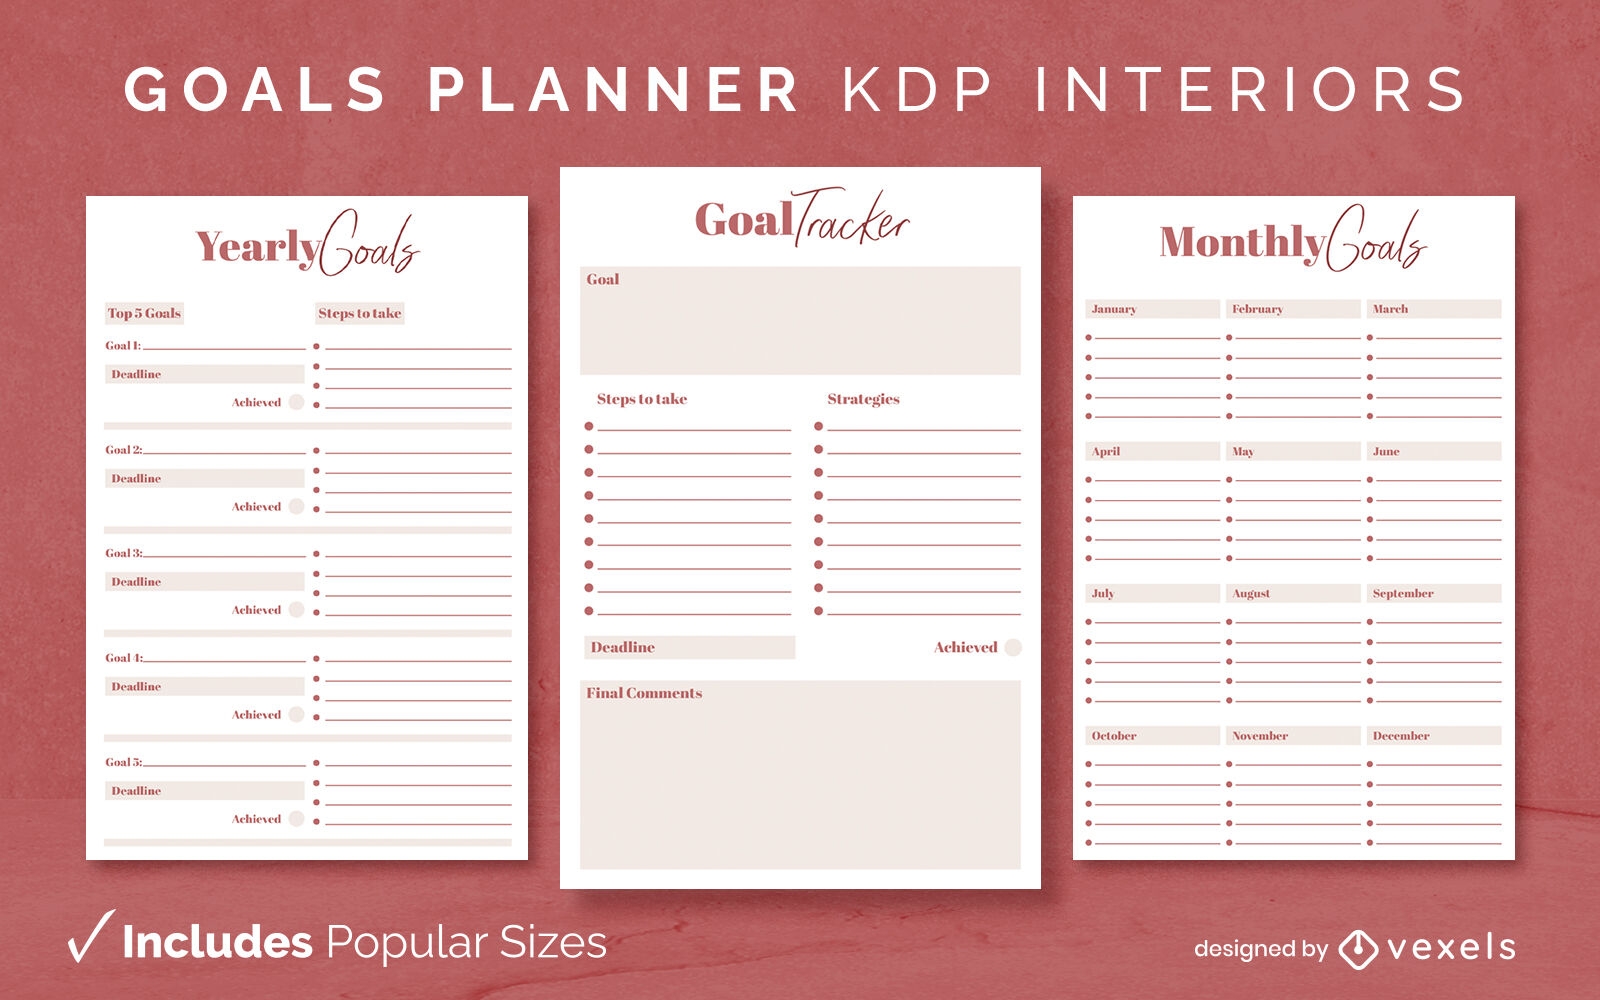 Modelo de planejador de metas anual / mensal KDP interior